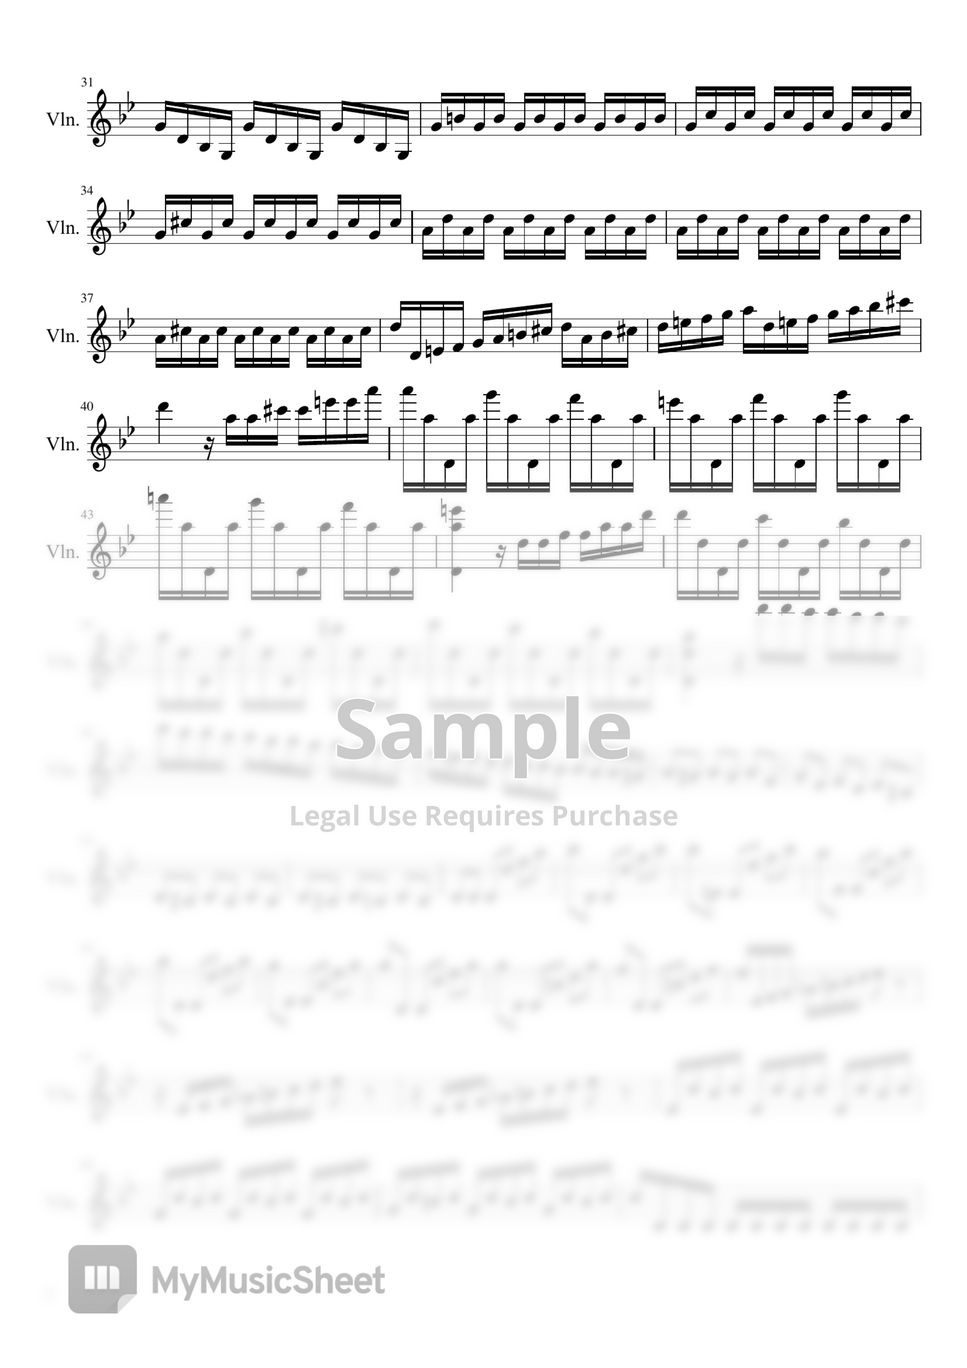 Antonio Vivaldi - Summer - Third movement - For Volin Solo (维瓦尔第 四季 夏 - Violin Concerto in G minor, RV 315 -  - The Four Seasons - Vivaldi) by poon